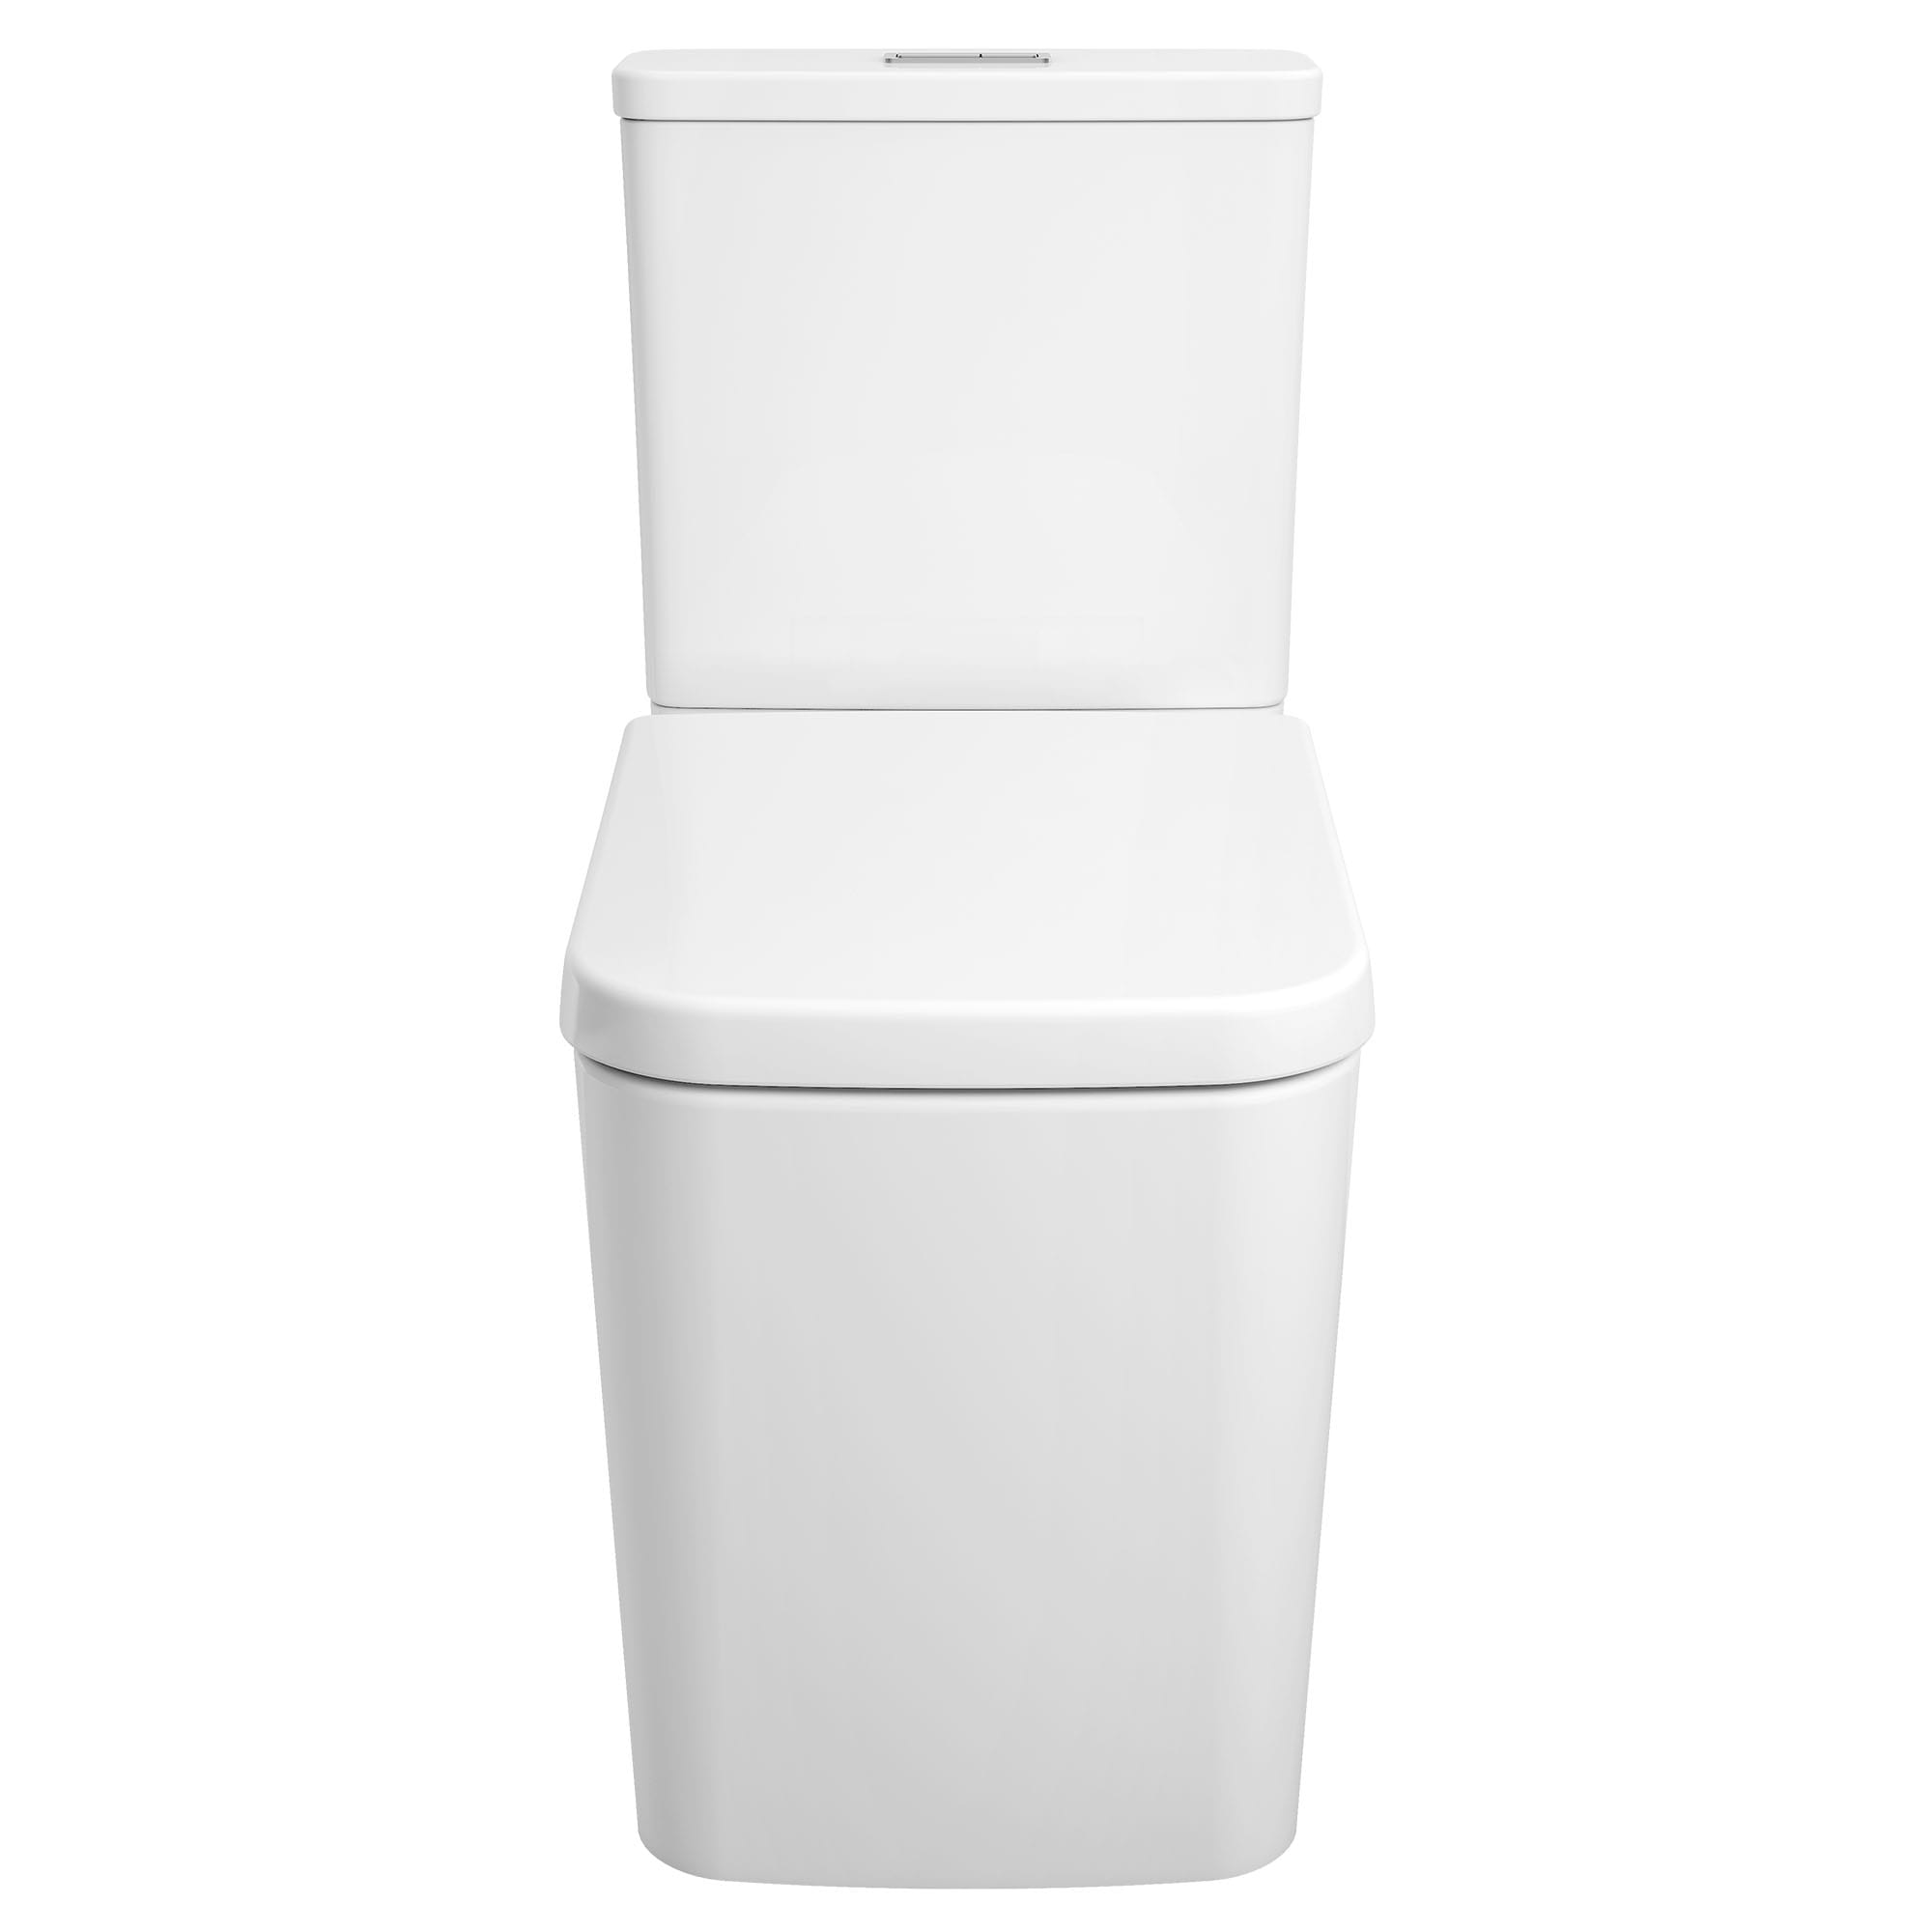 Eurocube Two-Piece Elongated Dual Flush Toilet